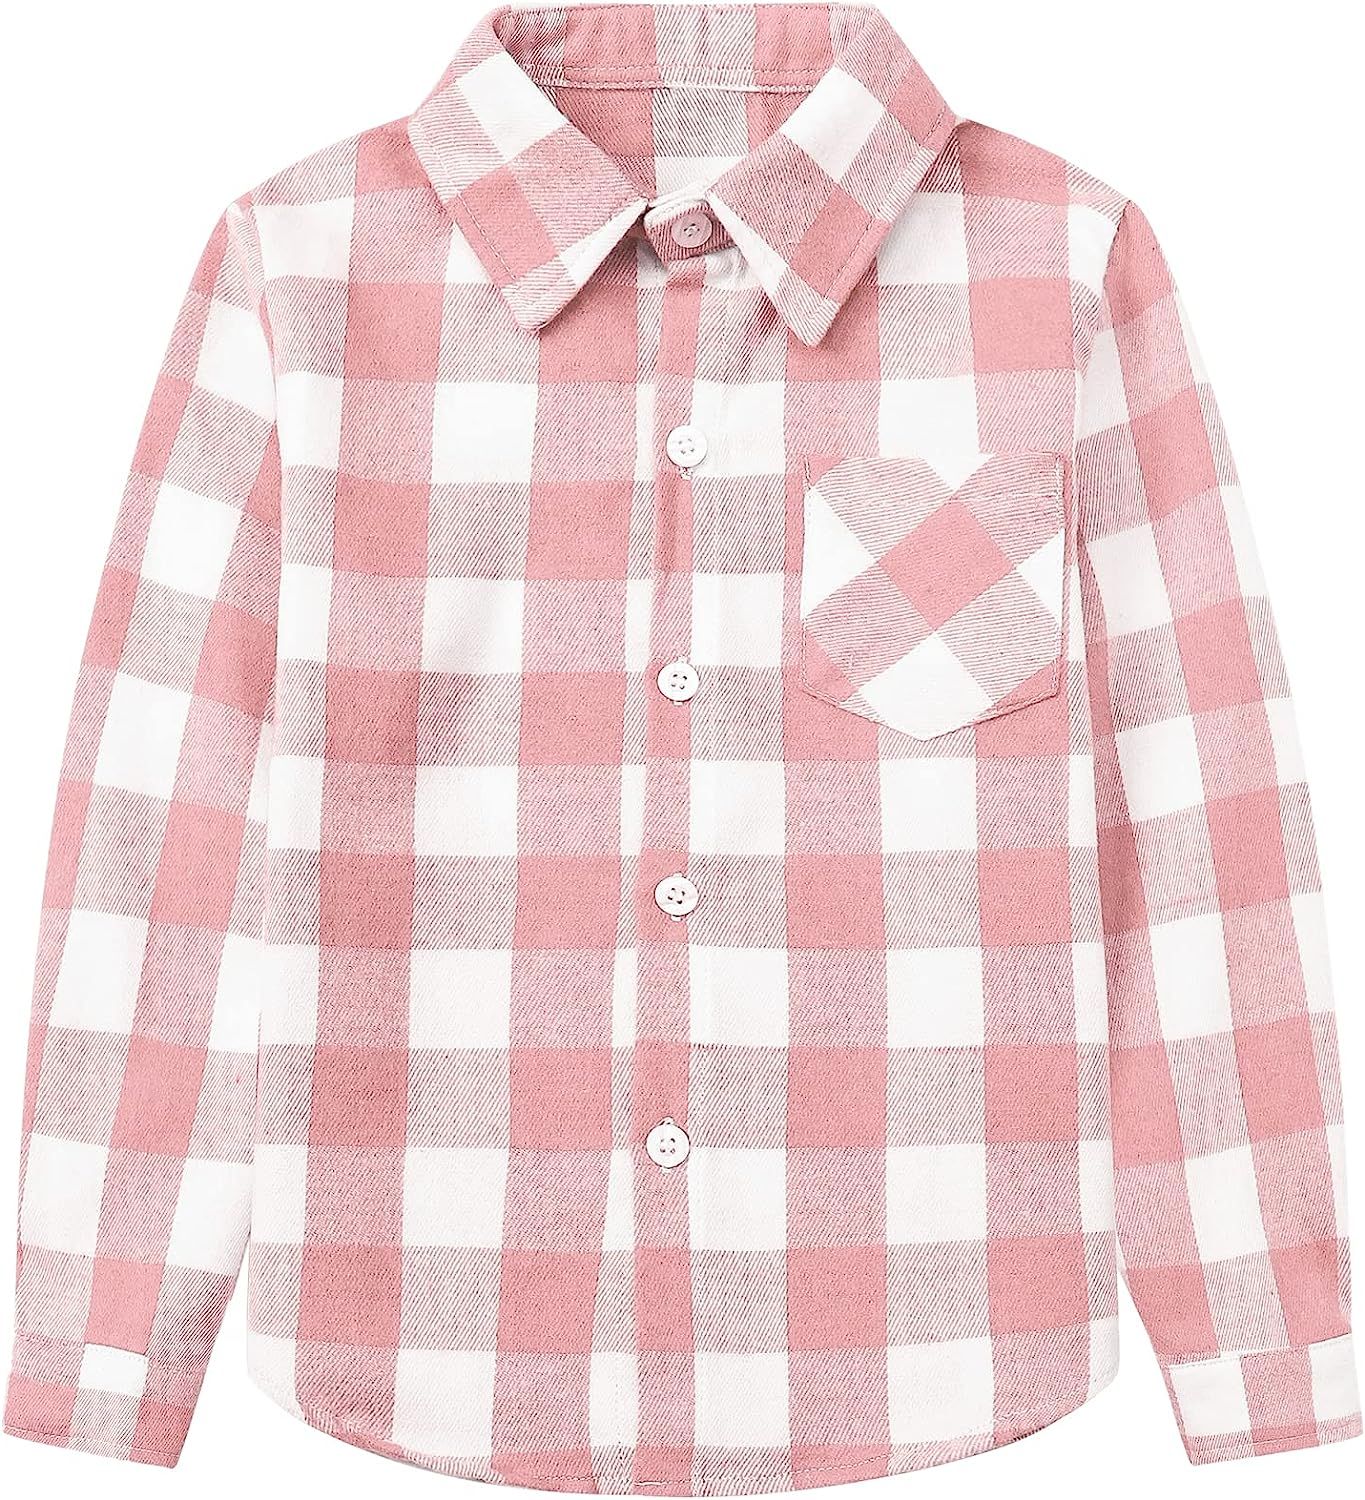 SANGTREE Girls' Women's Long Sleeve Flannel Plaid Shirt Button Down Cotton Shirts, 3 Months - US 2XL | Amazon (US)